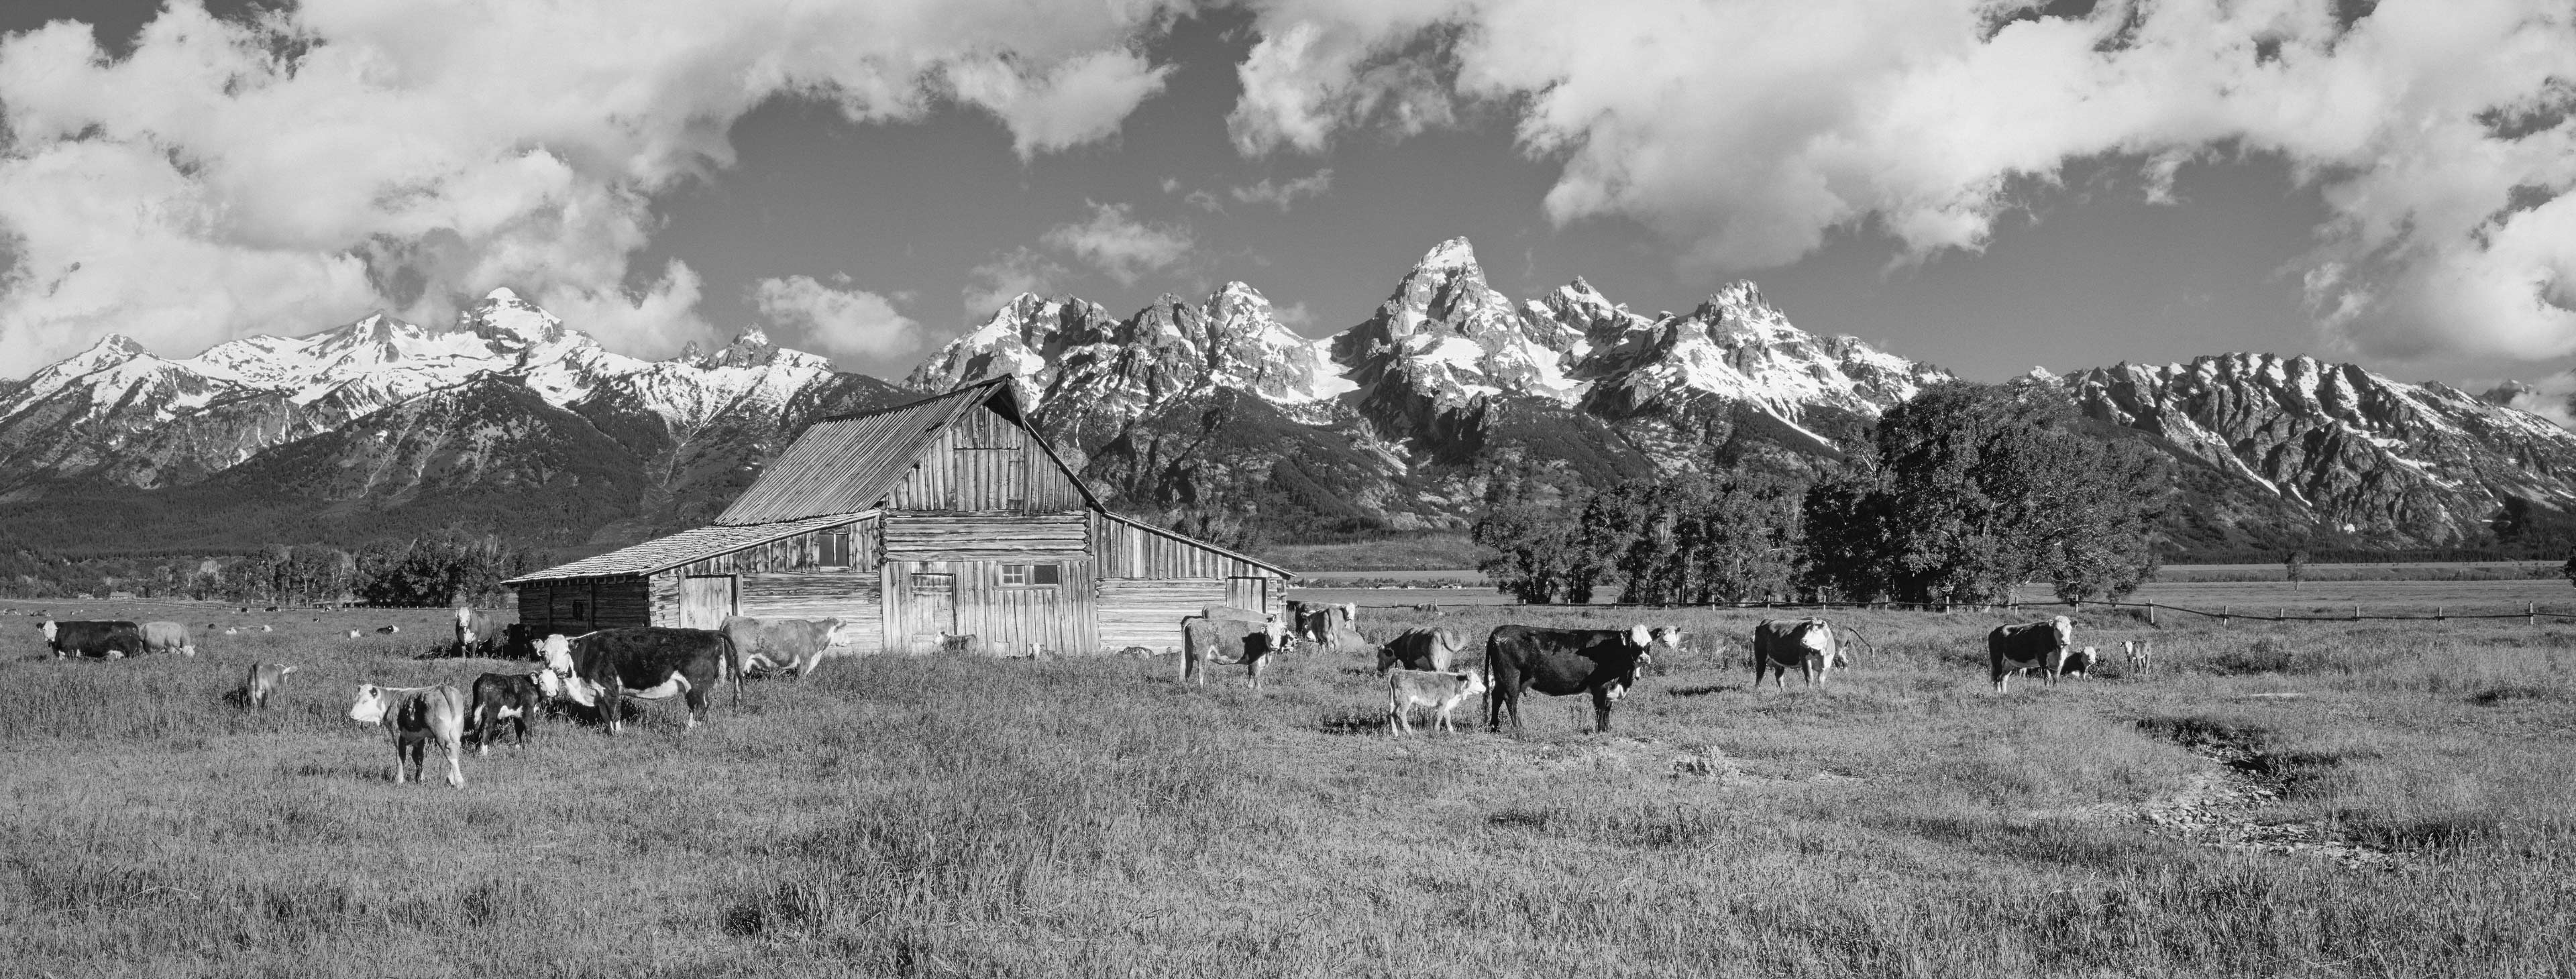 T.A. Moulton Barn, Mormon Row, Grand Teton National Park, Utah, USA 